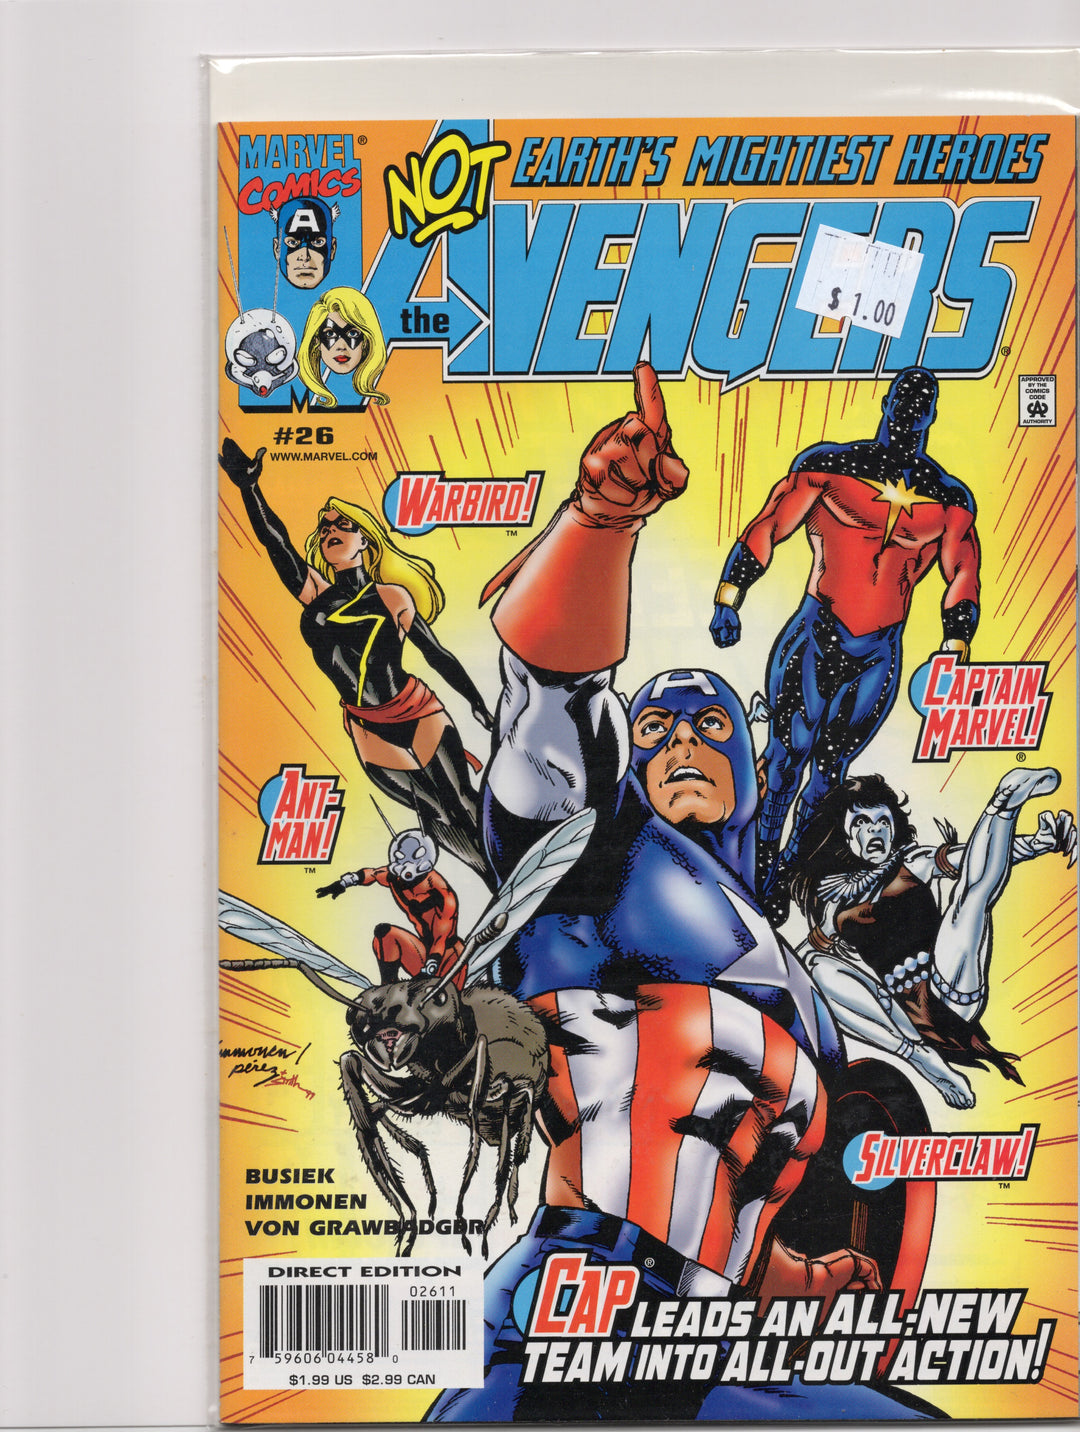 The Avengers : Earths Mightiest Heroes #26